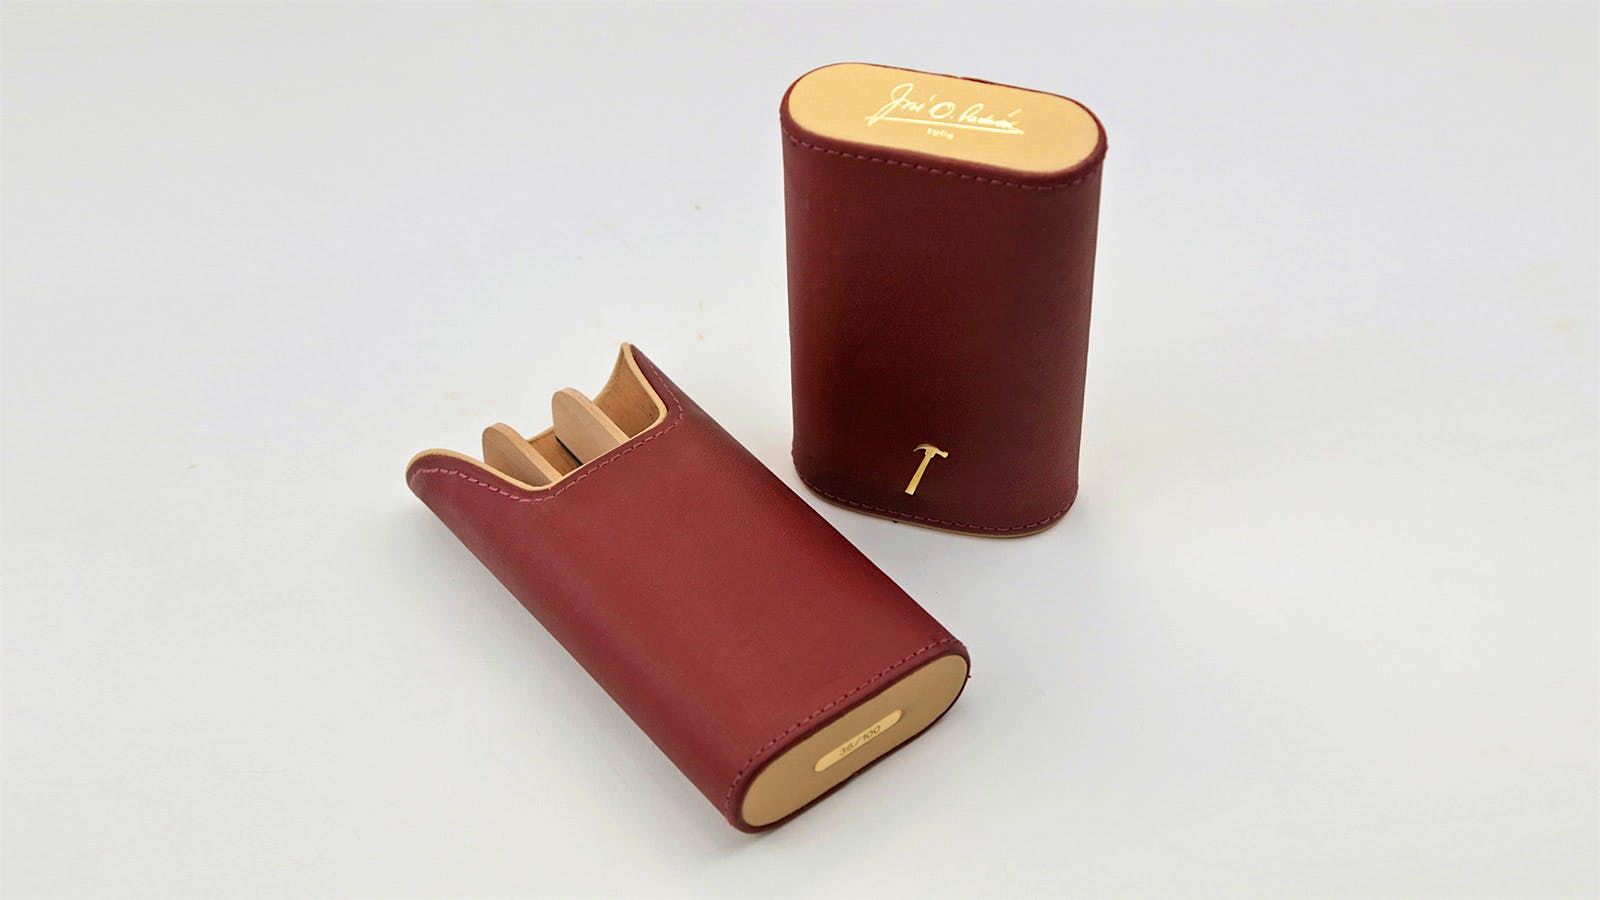 Derby brown double cigar case - Luxury Accessories